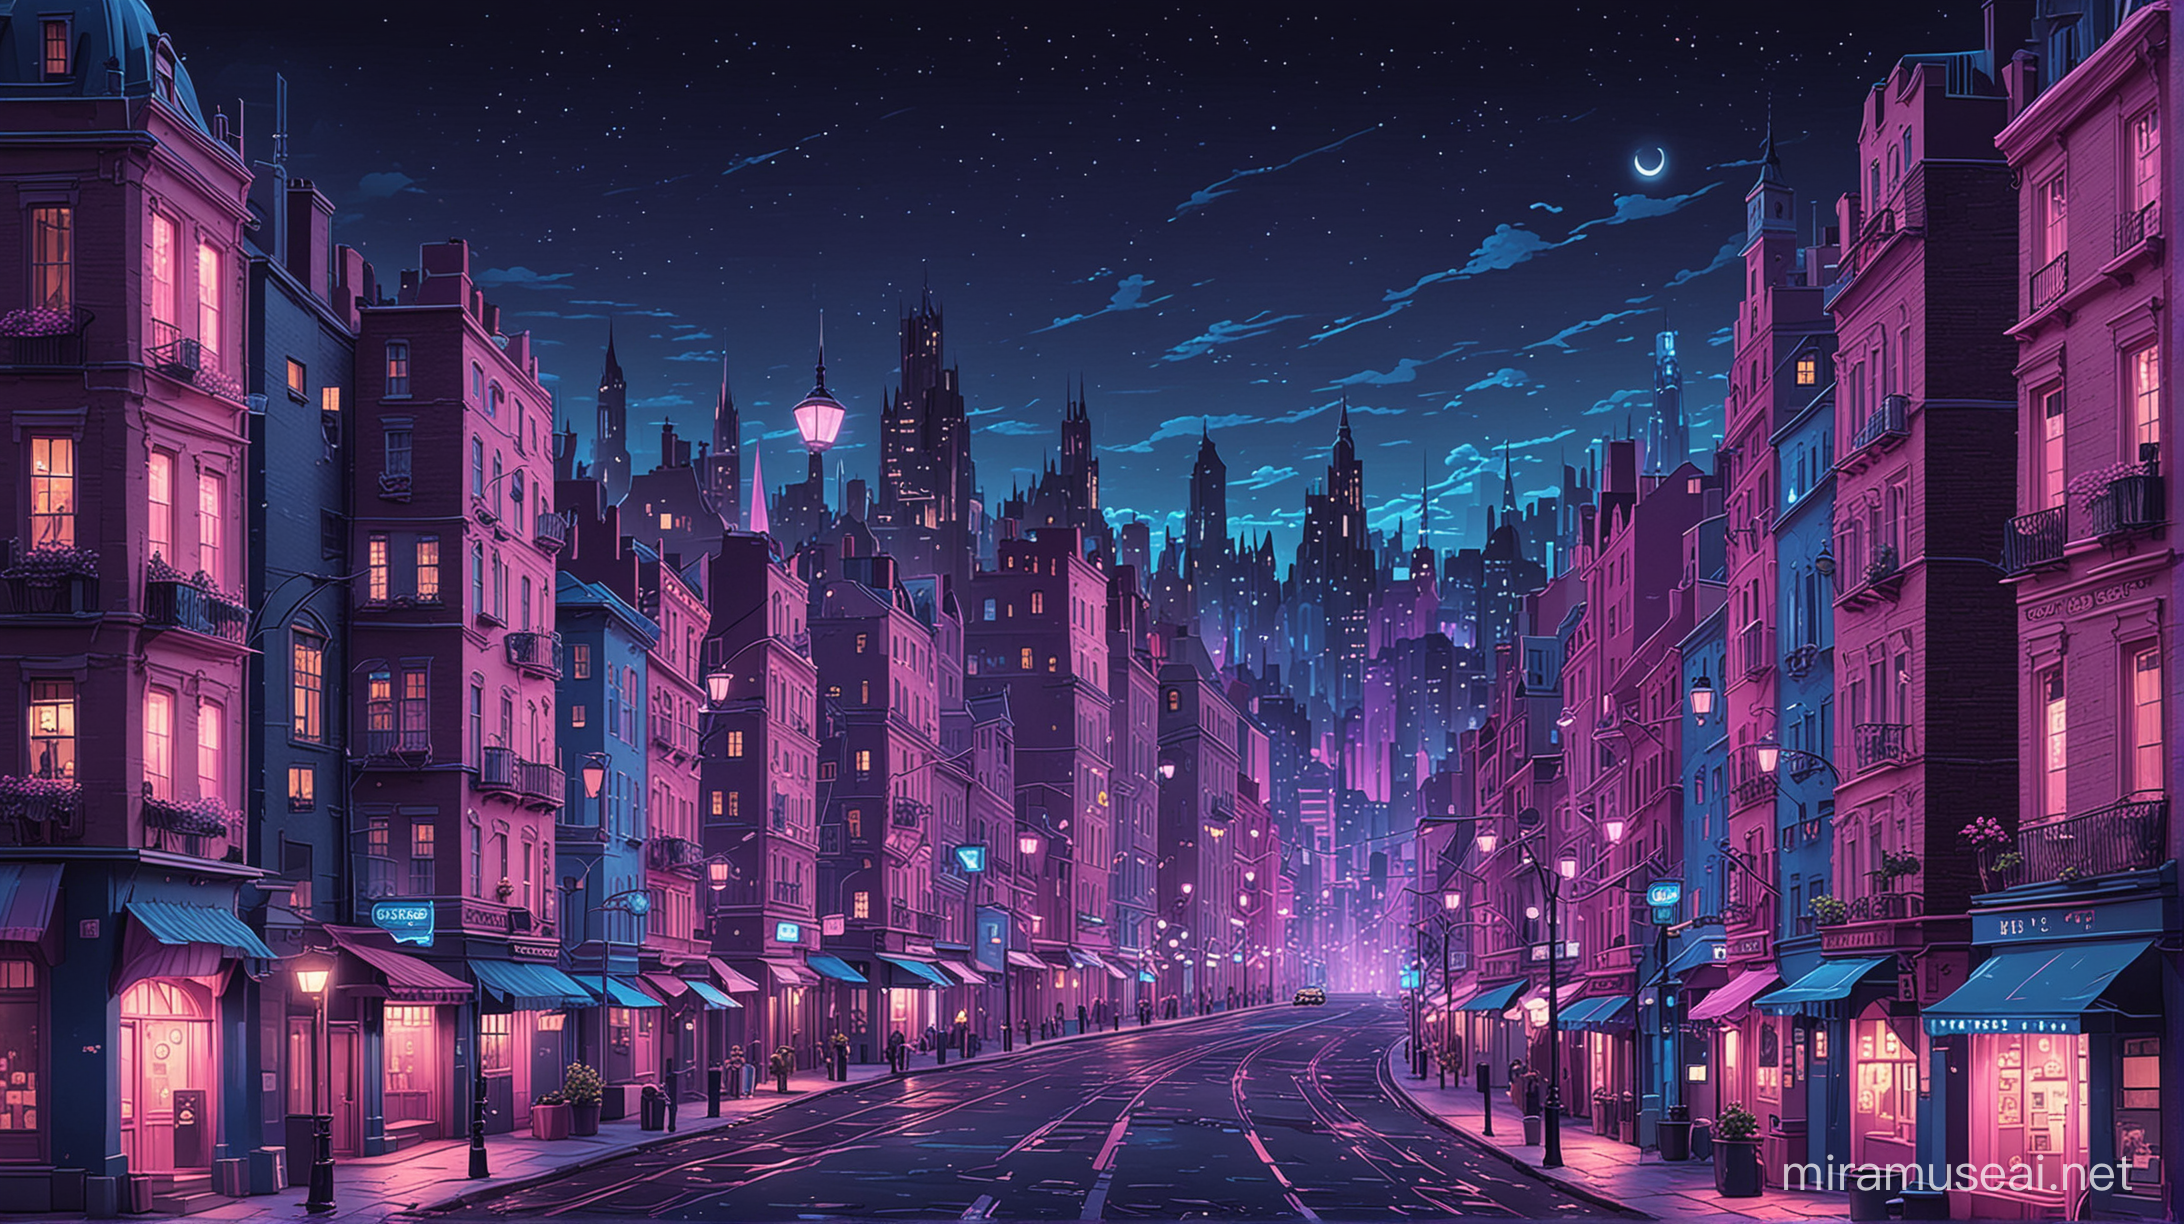 Vibrant Night Cityscape Cartoon Skyline Illuminated with Blue and Pink Lights